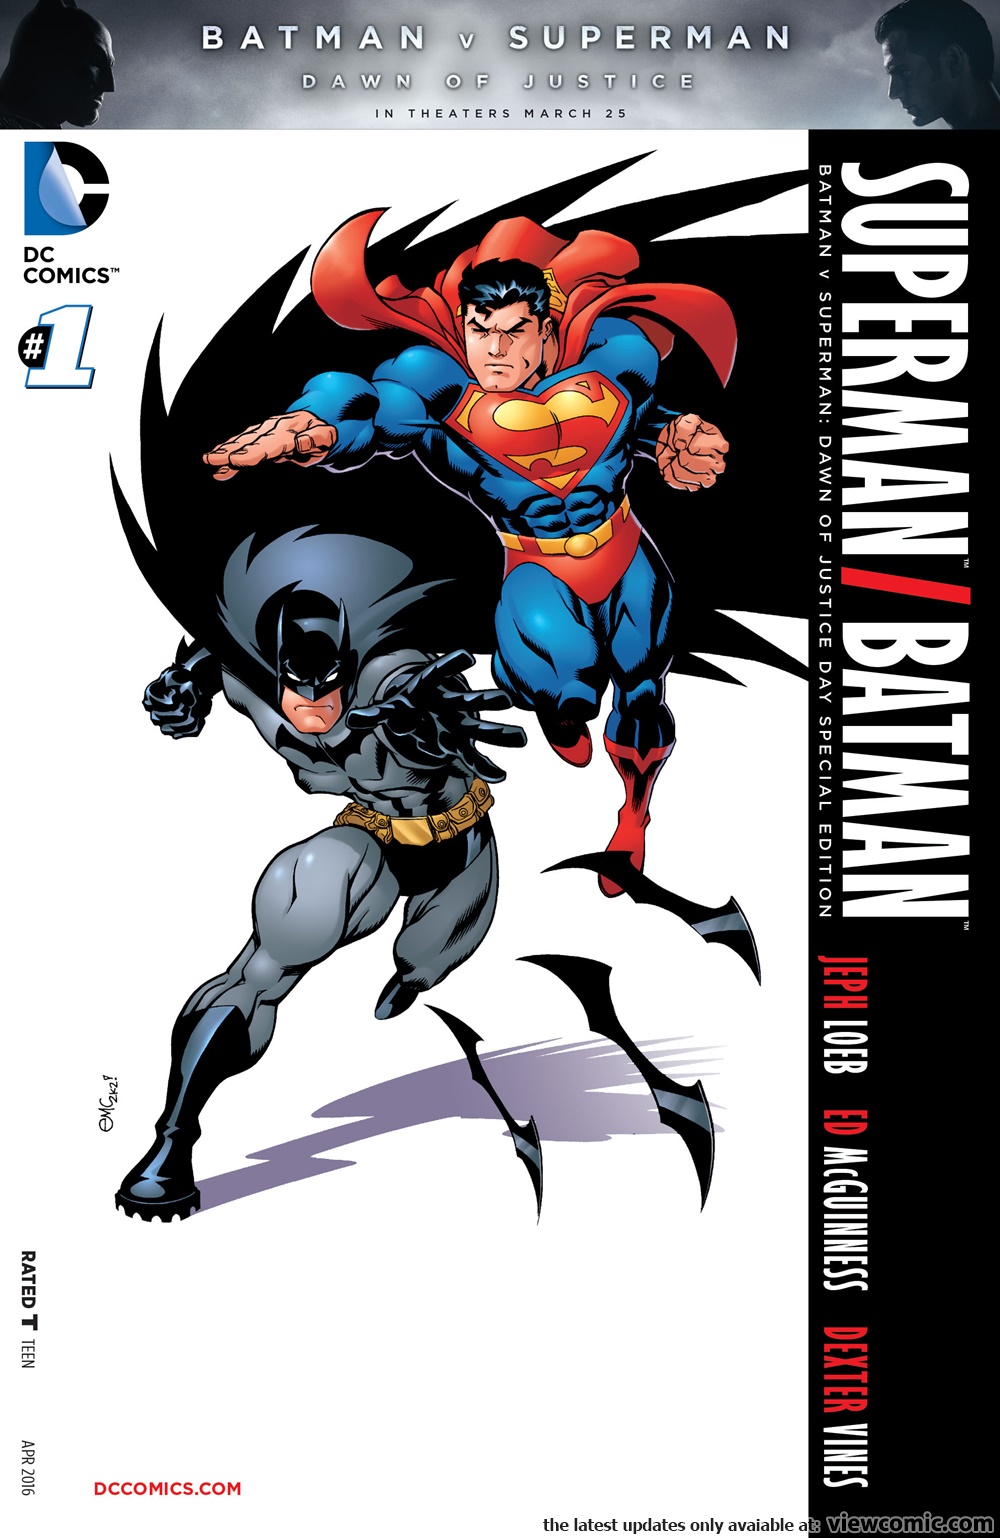 Superman Batman Batman V Superman Dawn Of Justice Special Edition 2016 |  Read Superman Batman Batman V Superman Dawn Of Justice Special Edition 2016  comic online in high quality. Read Full Comic